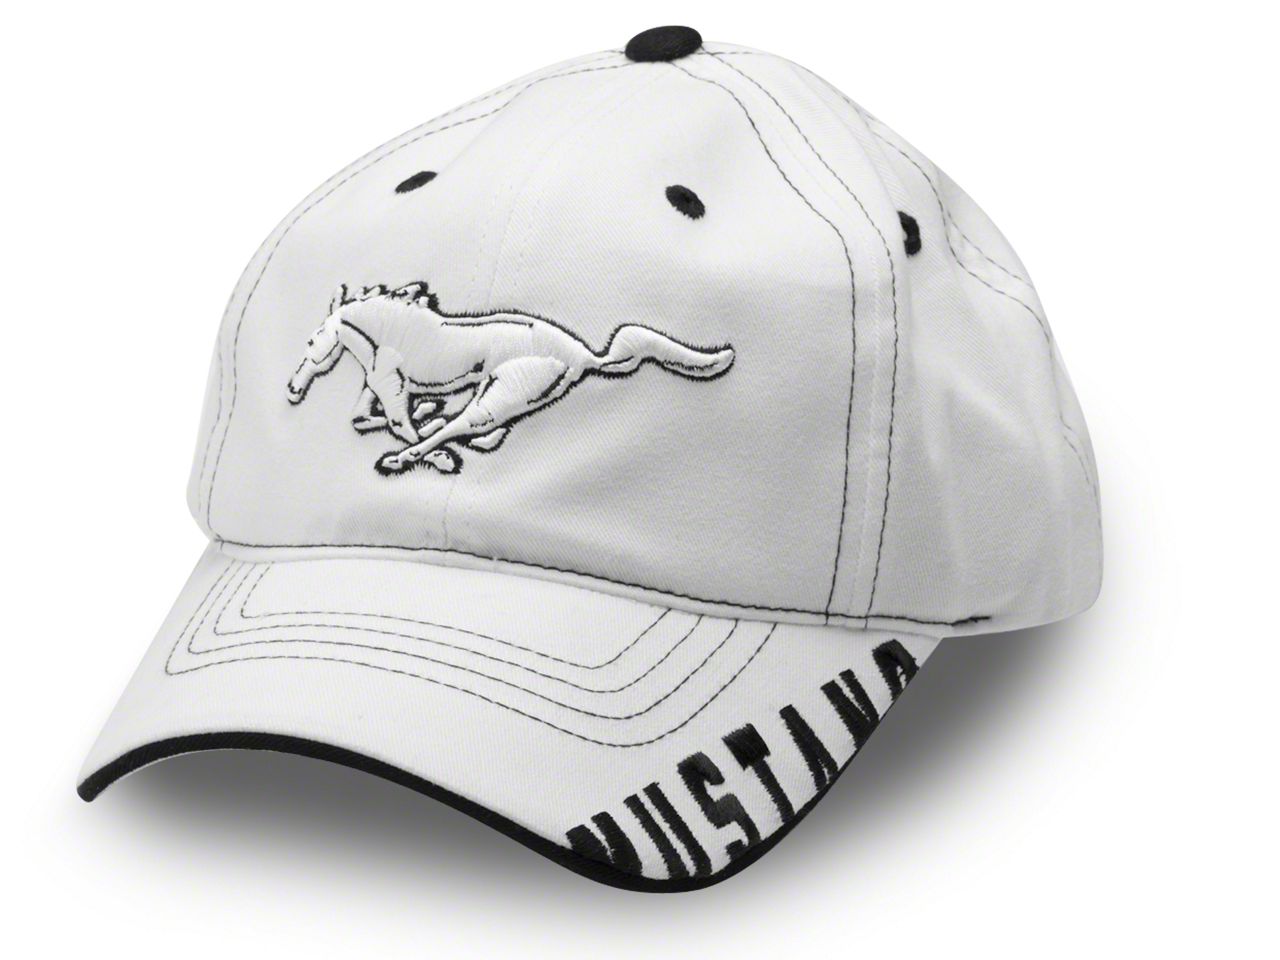 & AmericanMuscle Caps Mustang Hats Baseball Mustang |